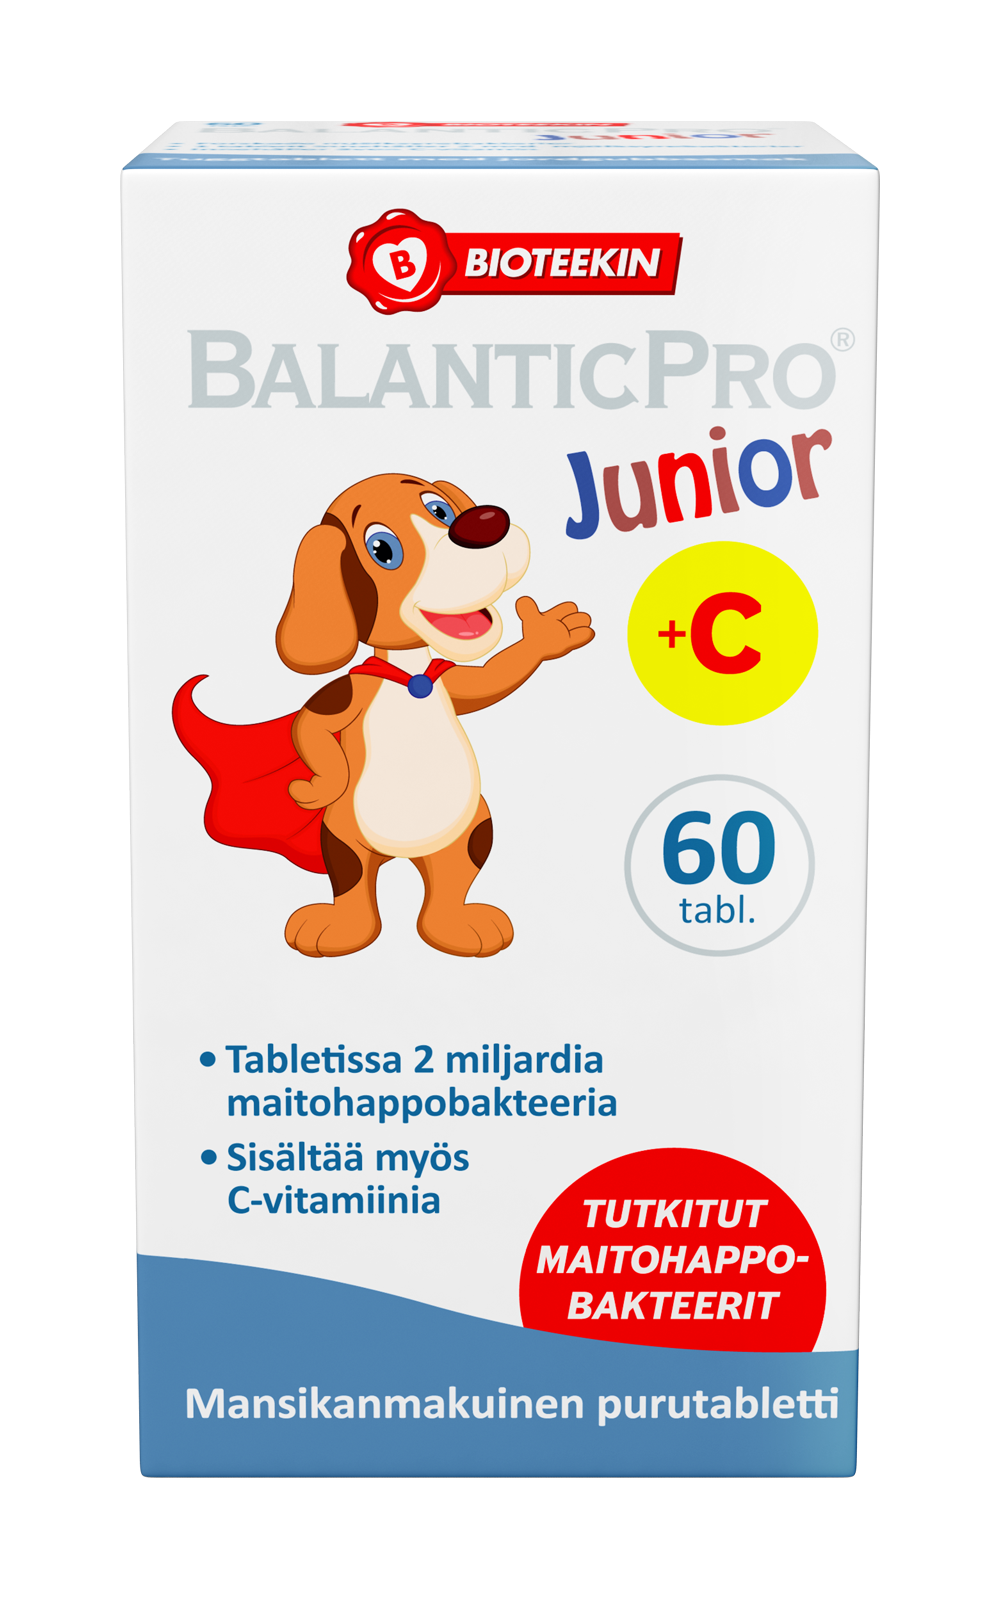 Bioteekin BalanticPro Junior 60 tabl. - erä